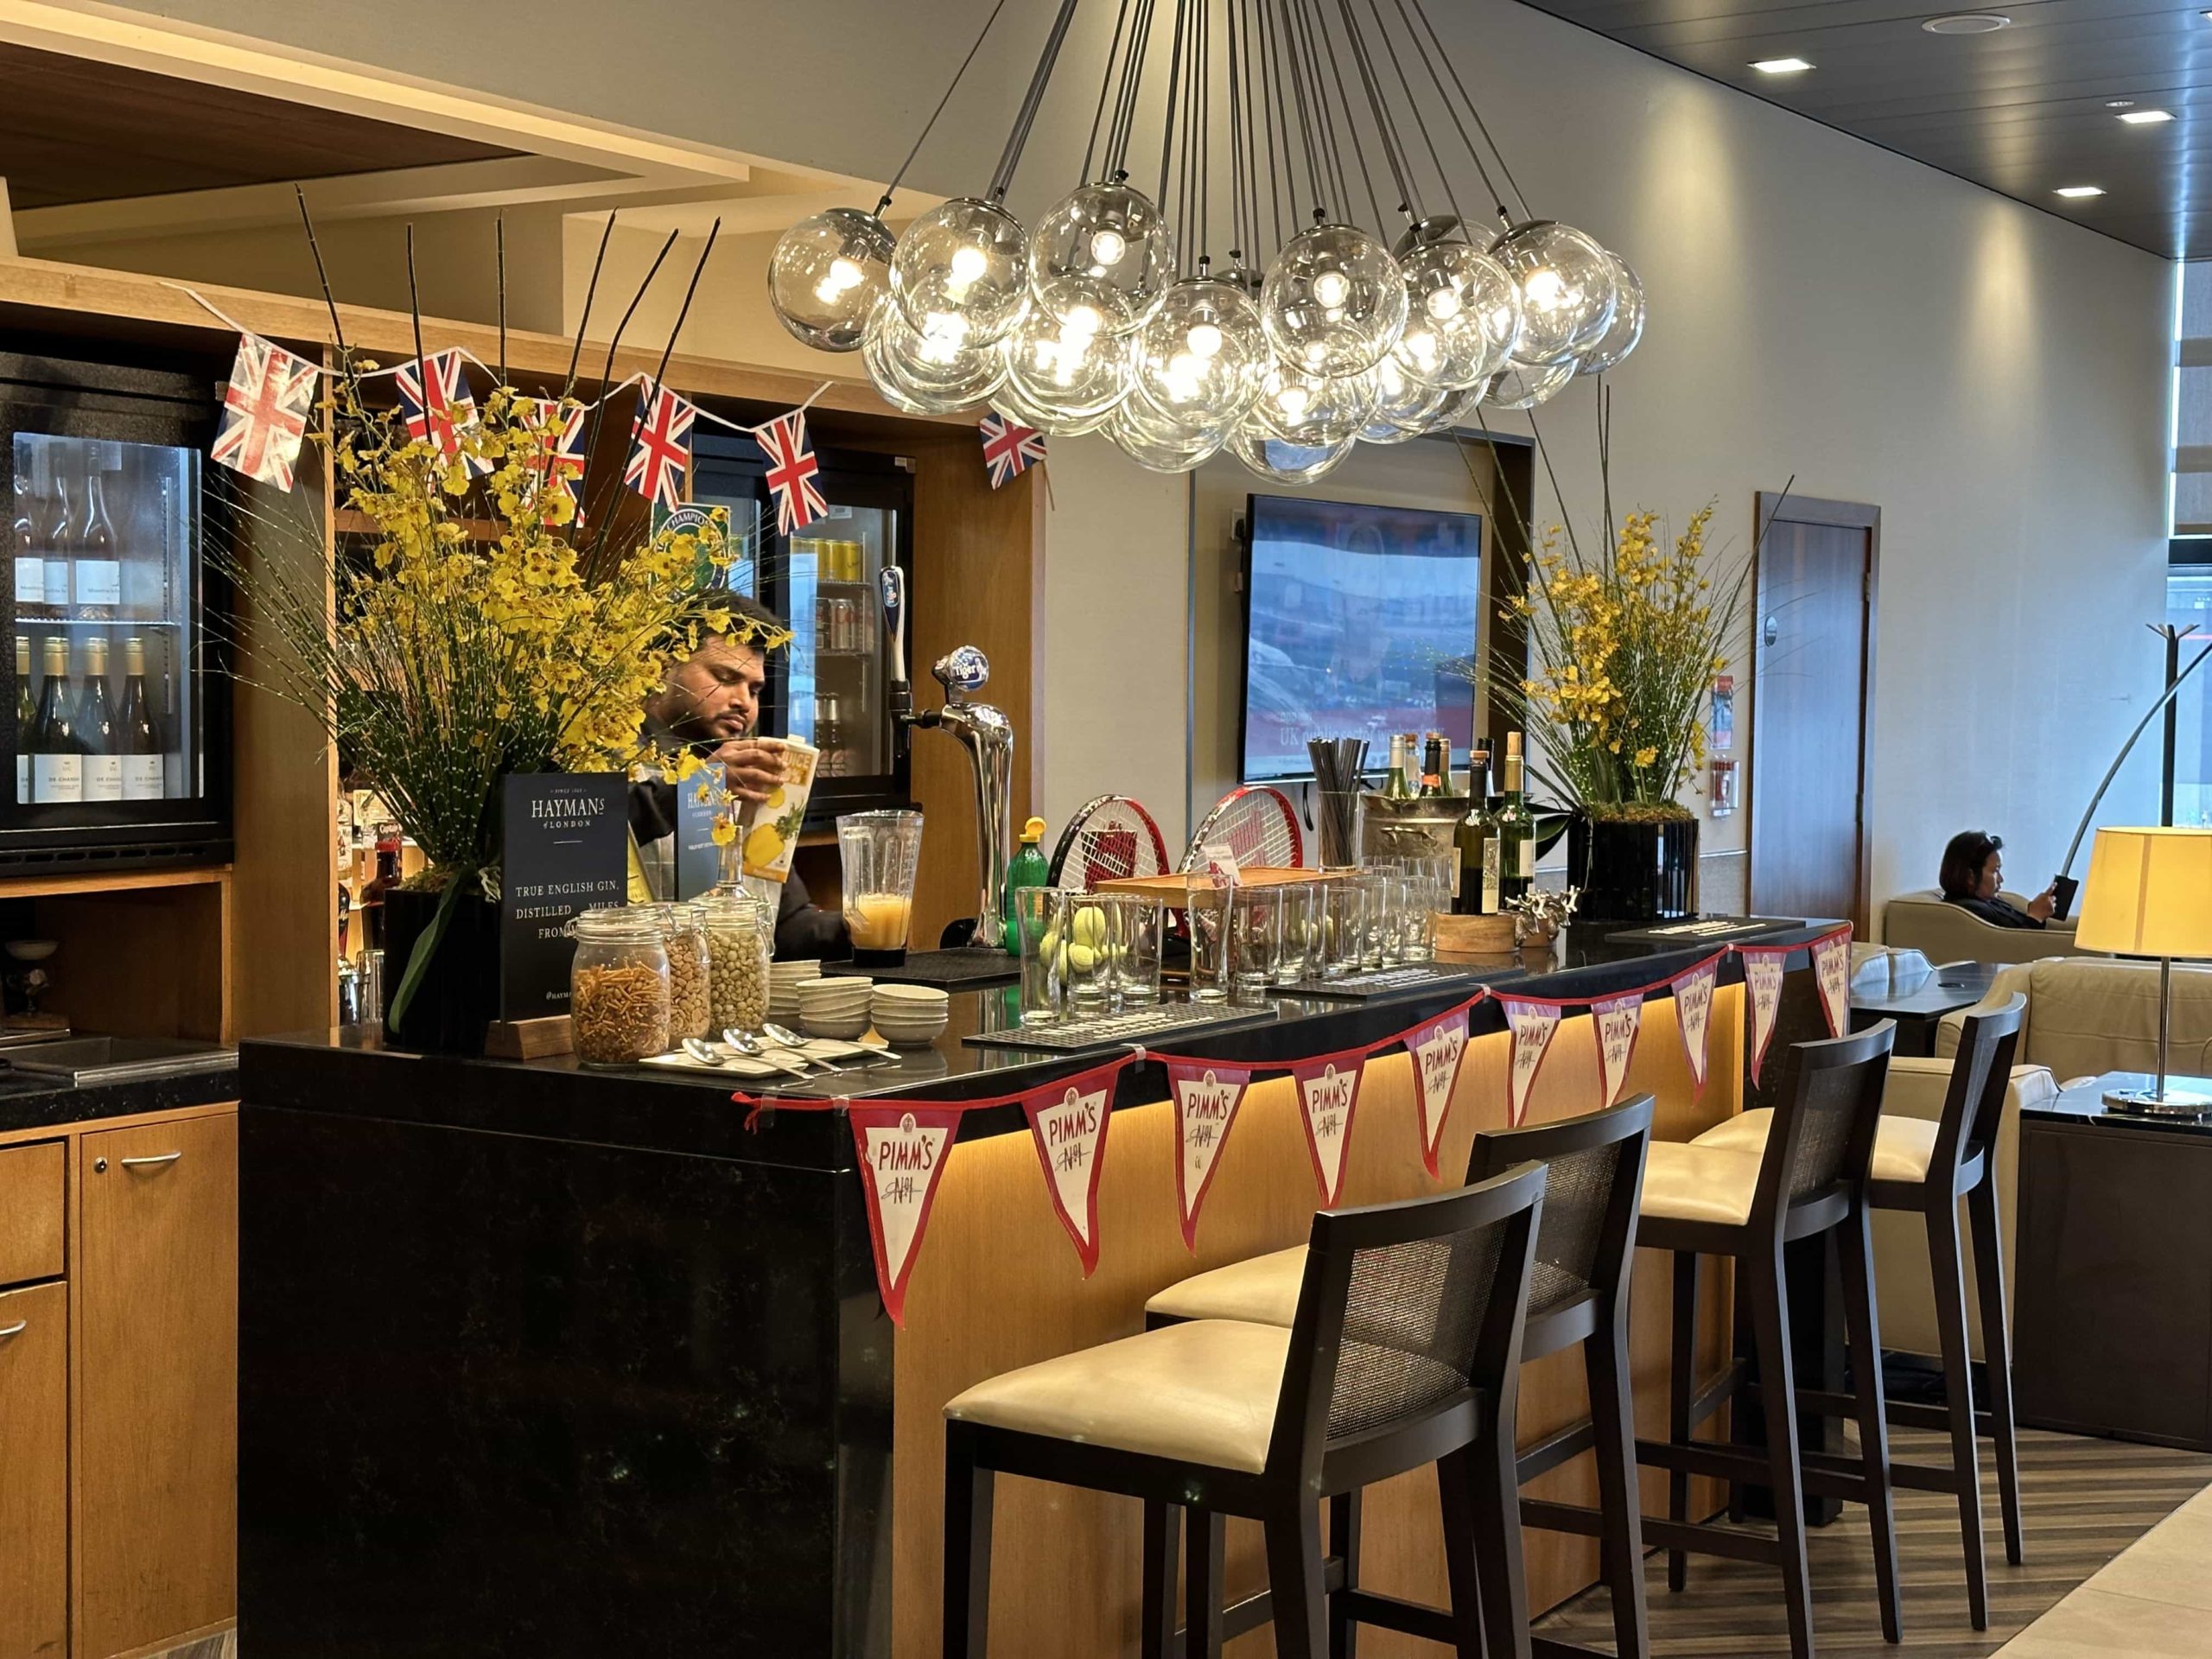 A small bar setup, decorated with Union Jacks to celebrate Wimbledon